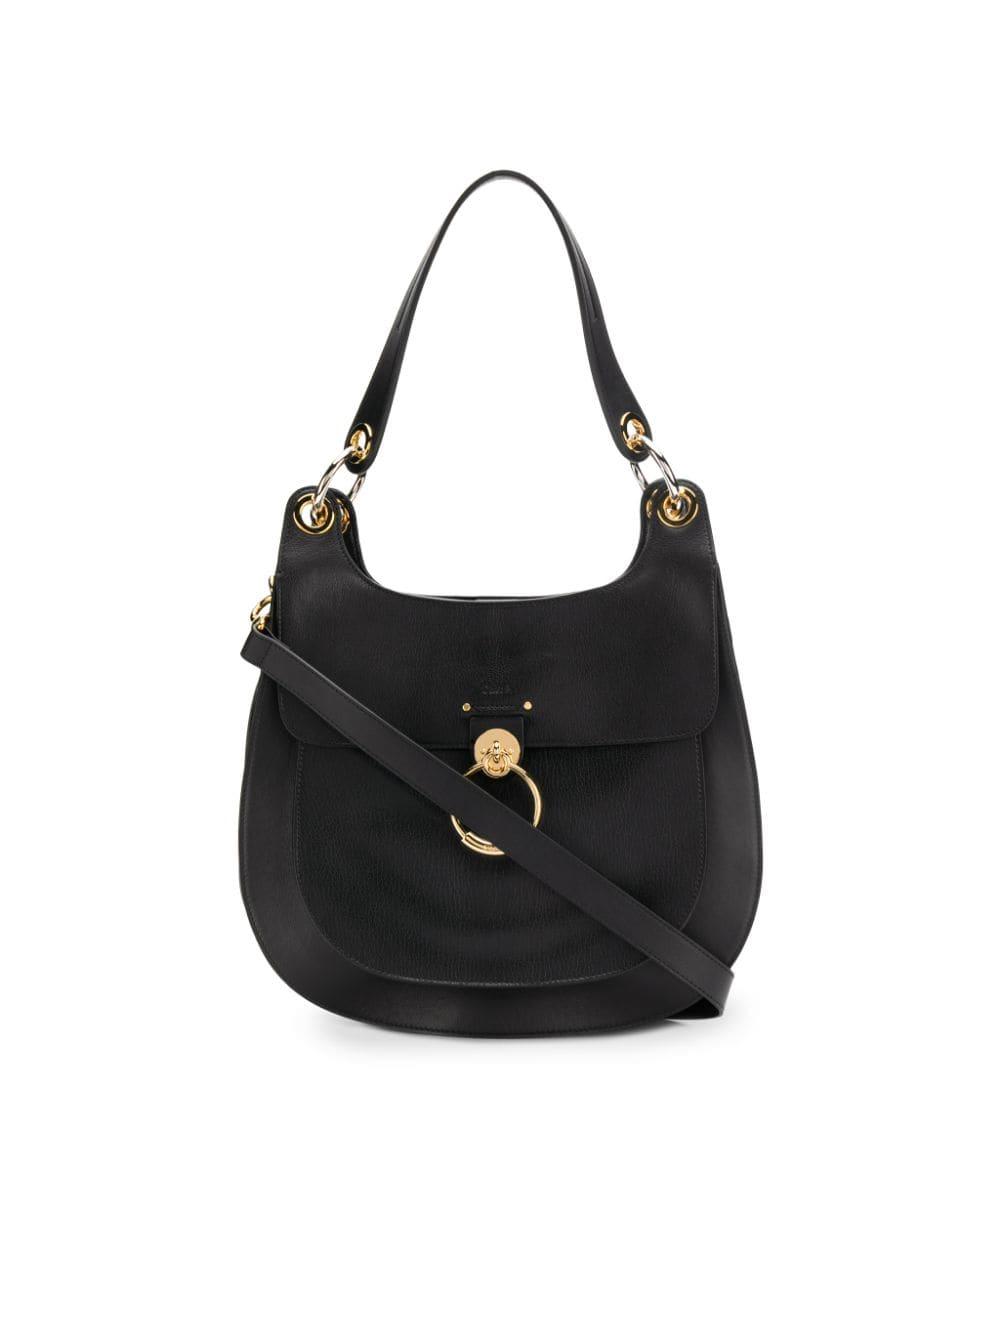 Chloé Leather Tess Hobo Bag in Black - Lyst